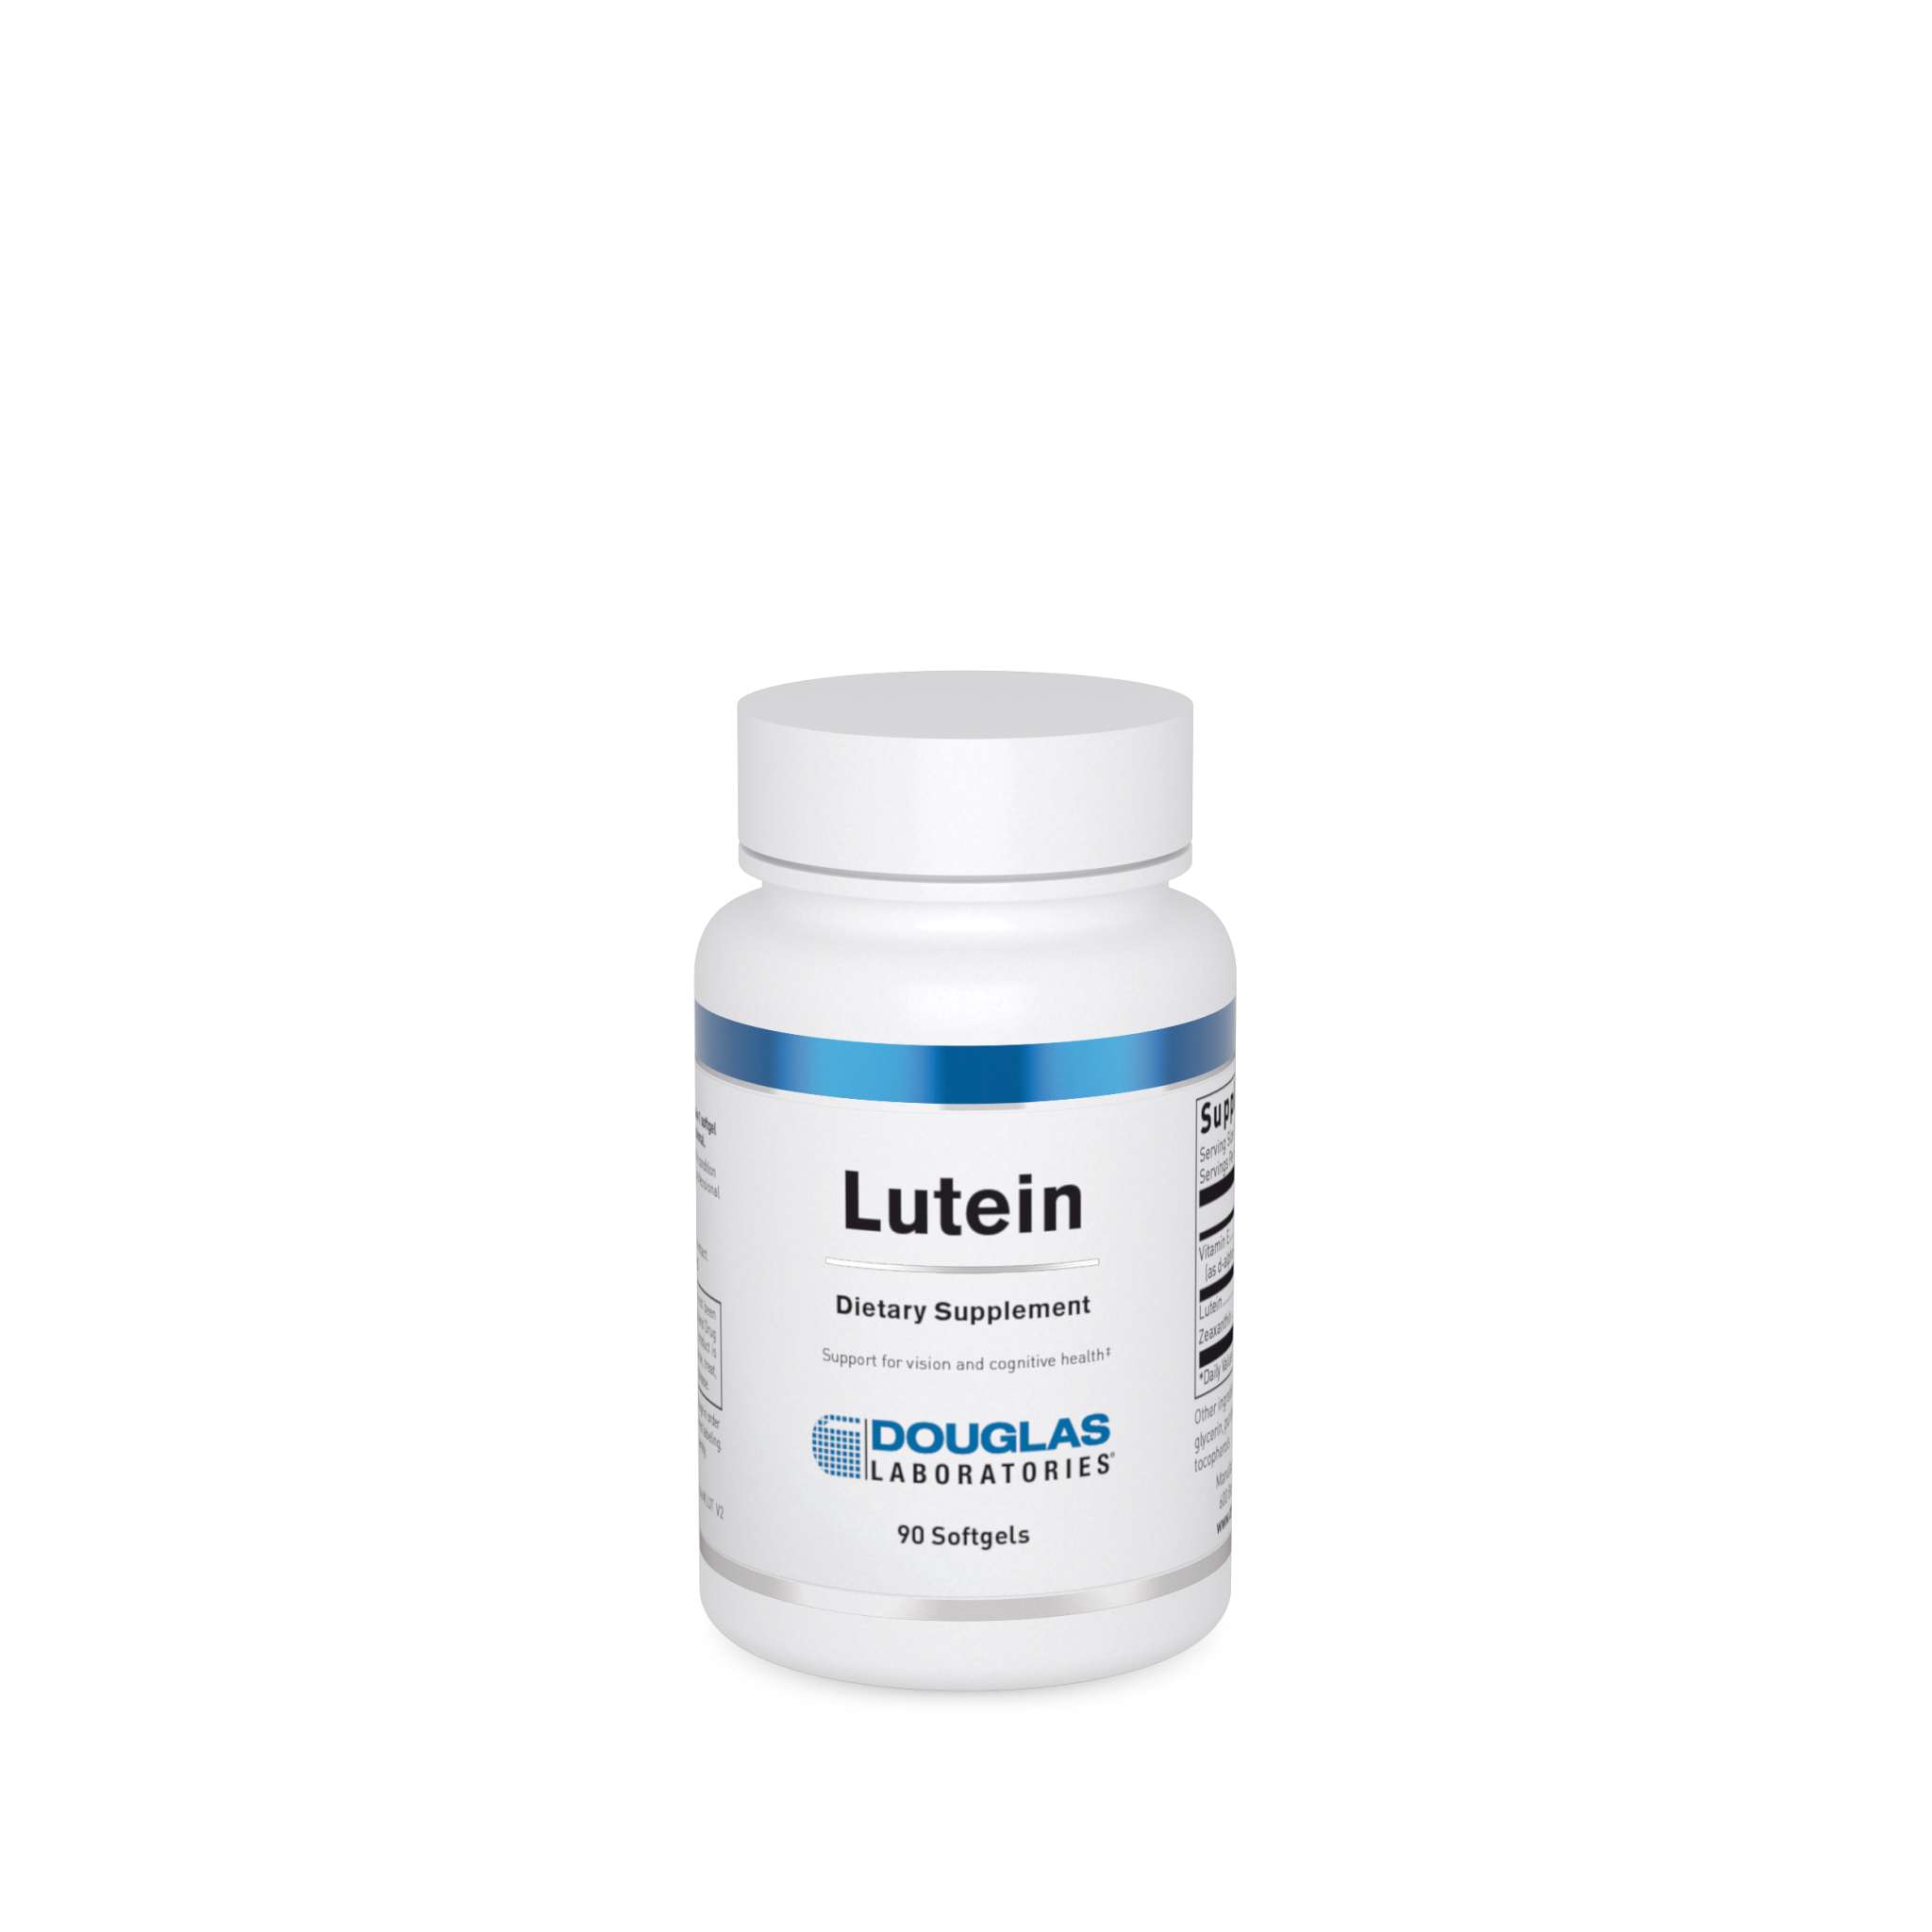 Douglas Laboratories - Lutein 6 mg